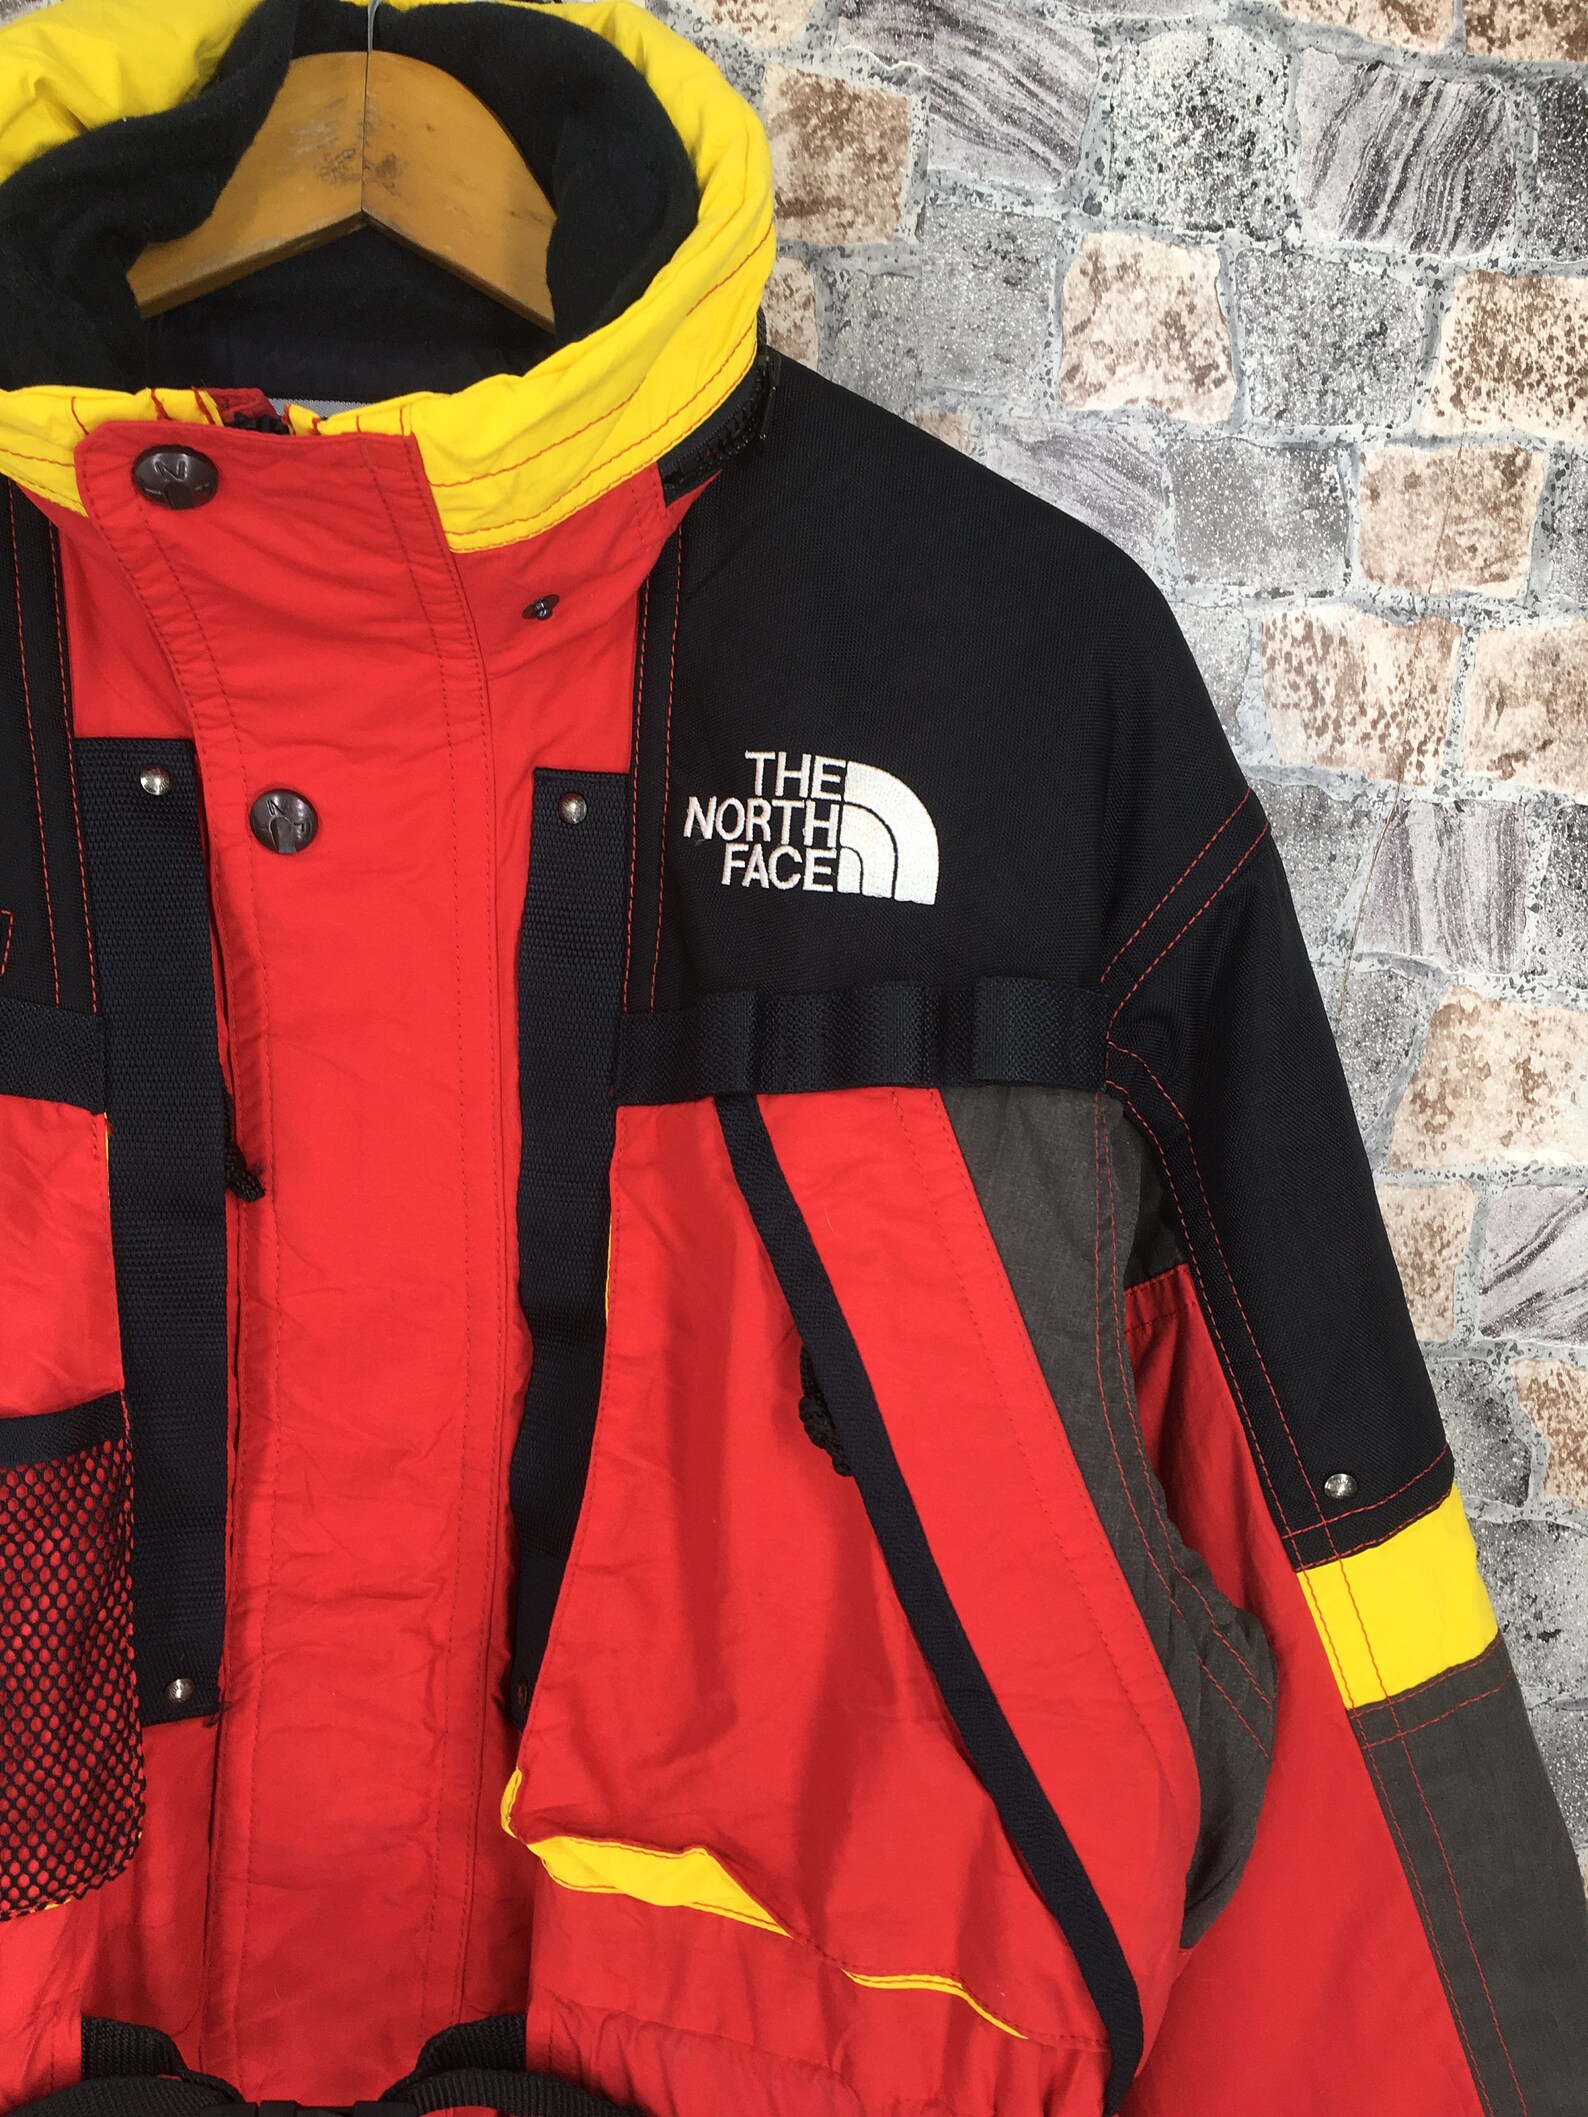 The North Face Jacket Ski Wear Hoodie Mens Medium Vintage | Etsy